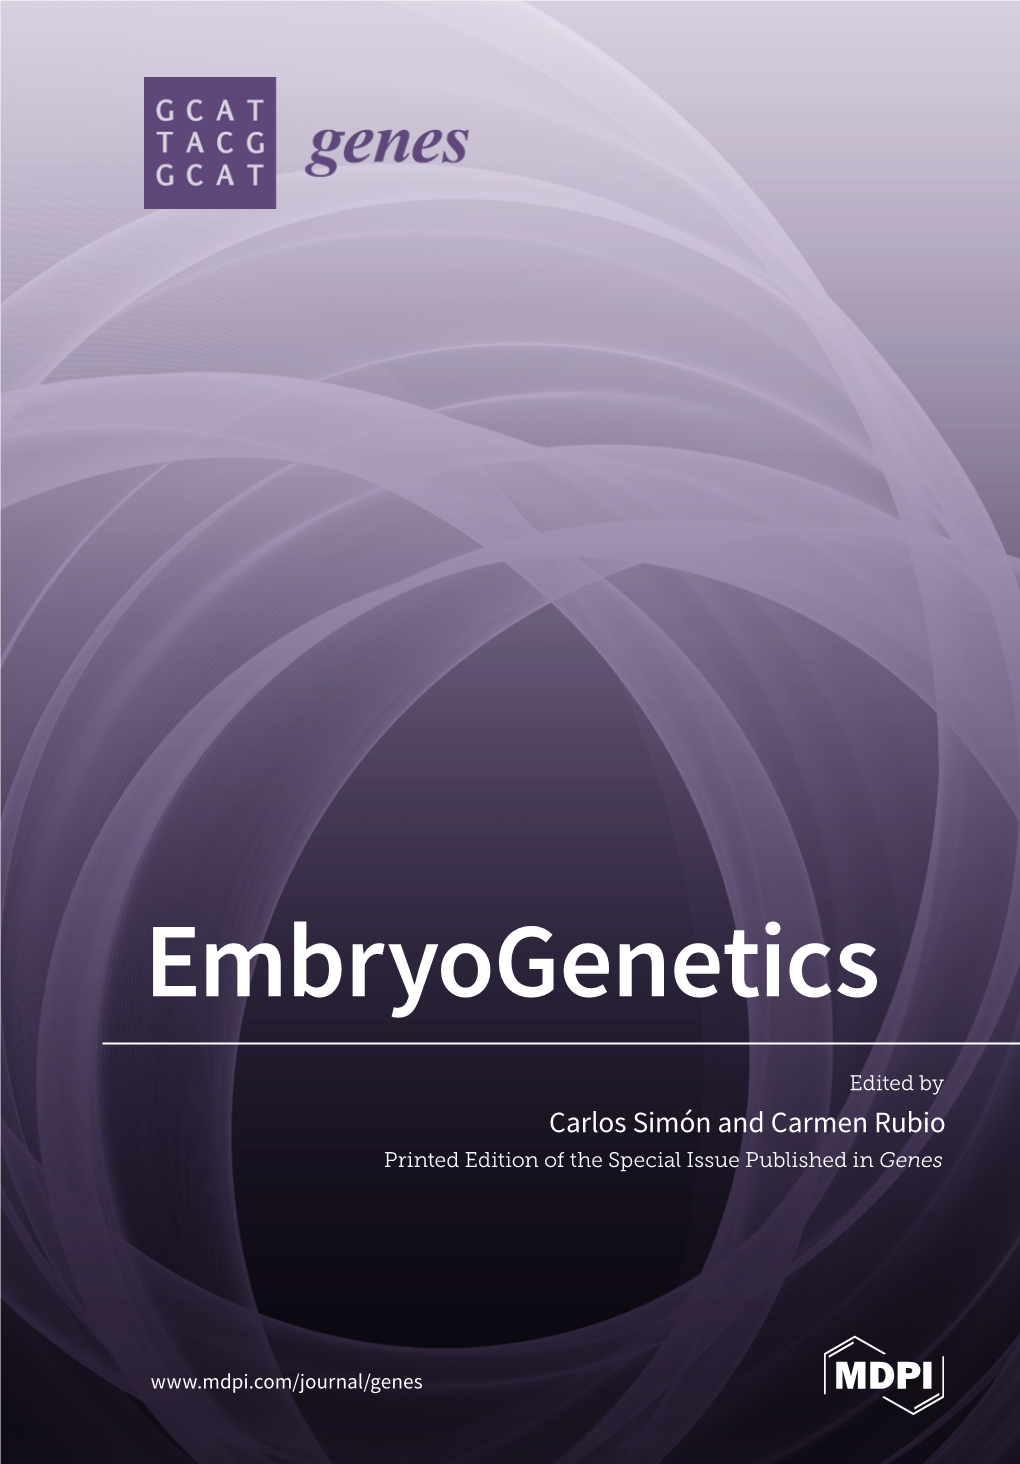 Embryogenetics • Carlos Simón and Carmen Rubio Carmen and Simón • Carlos